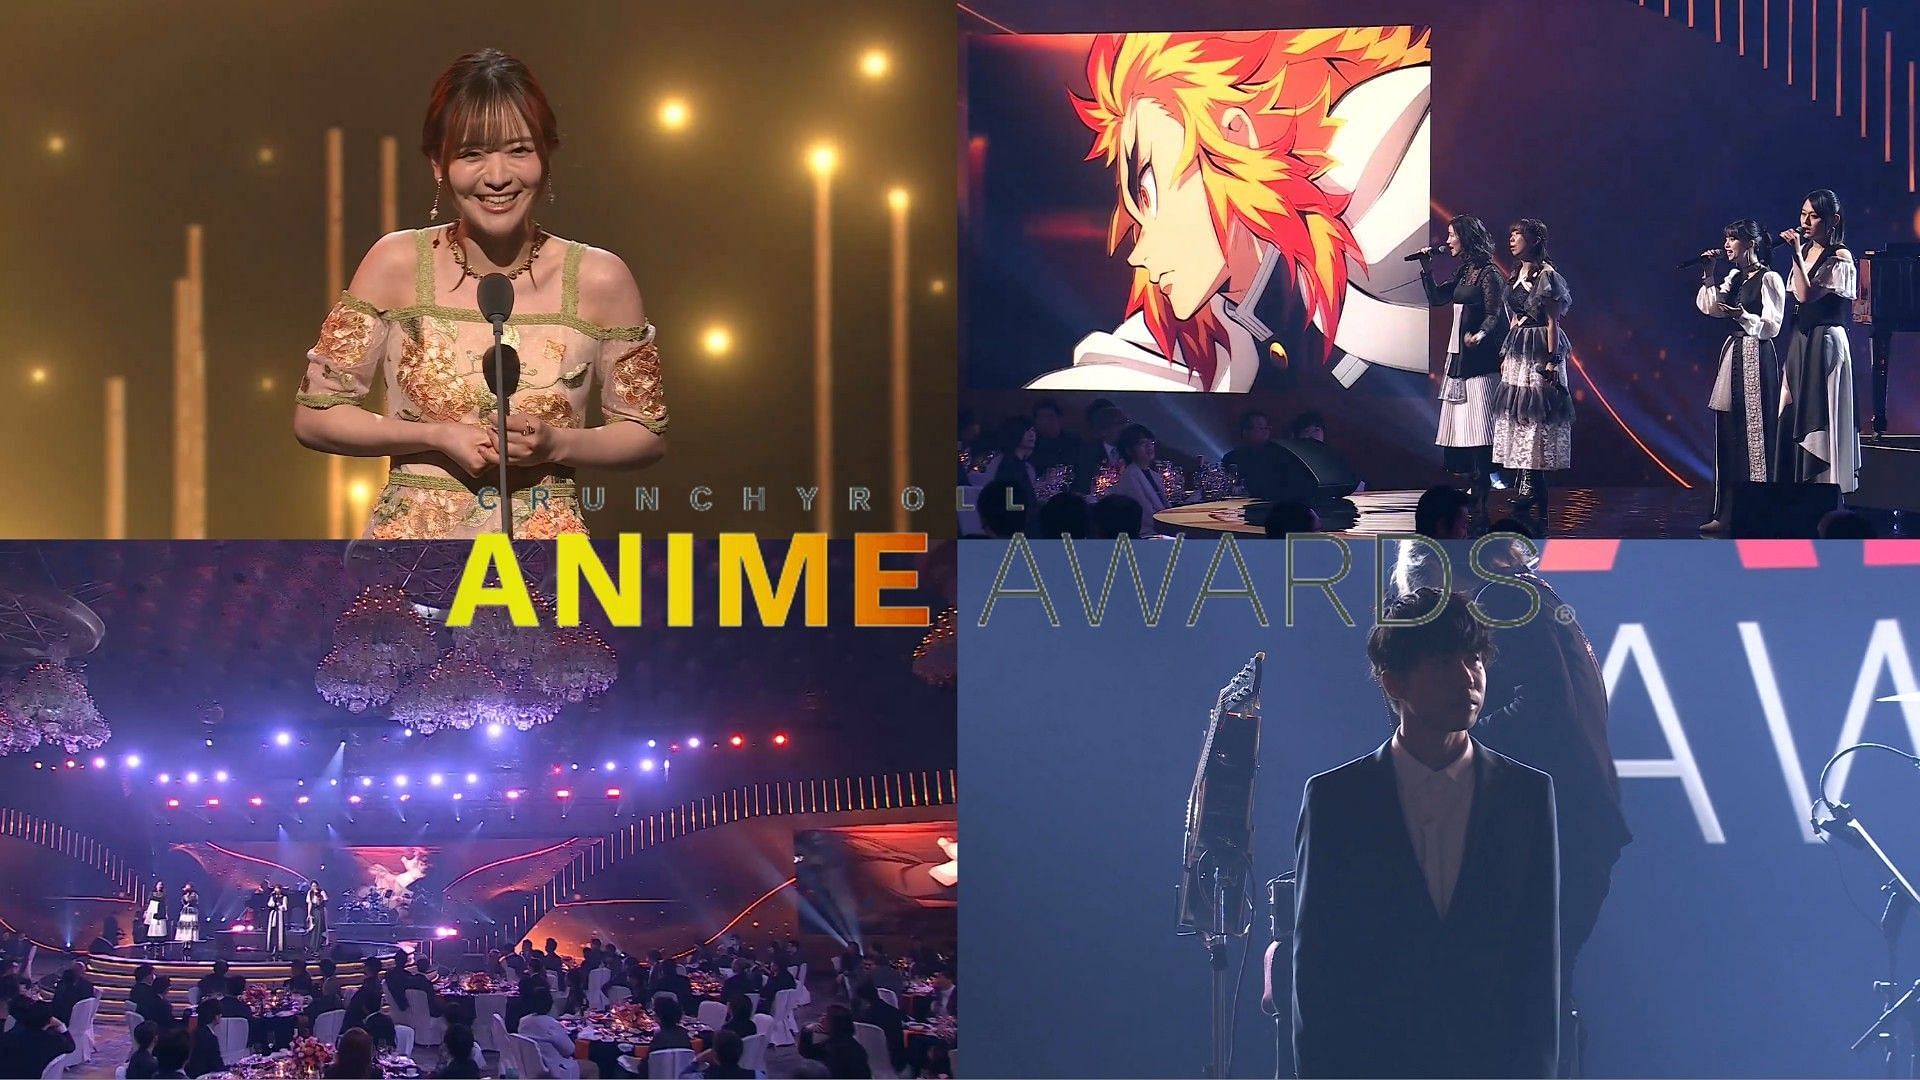 Presenters Crunchyroll Anime Awards Announced - But Why Tho?